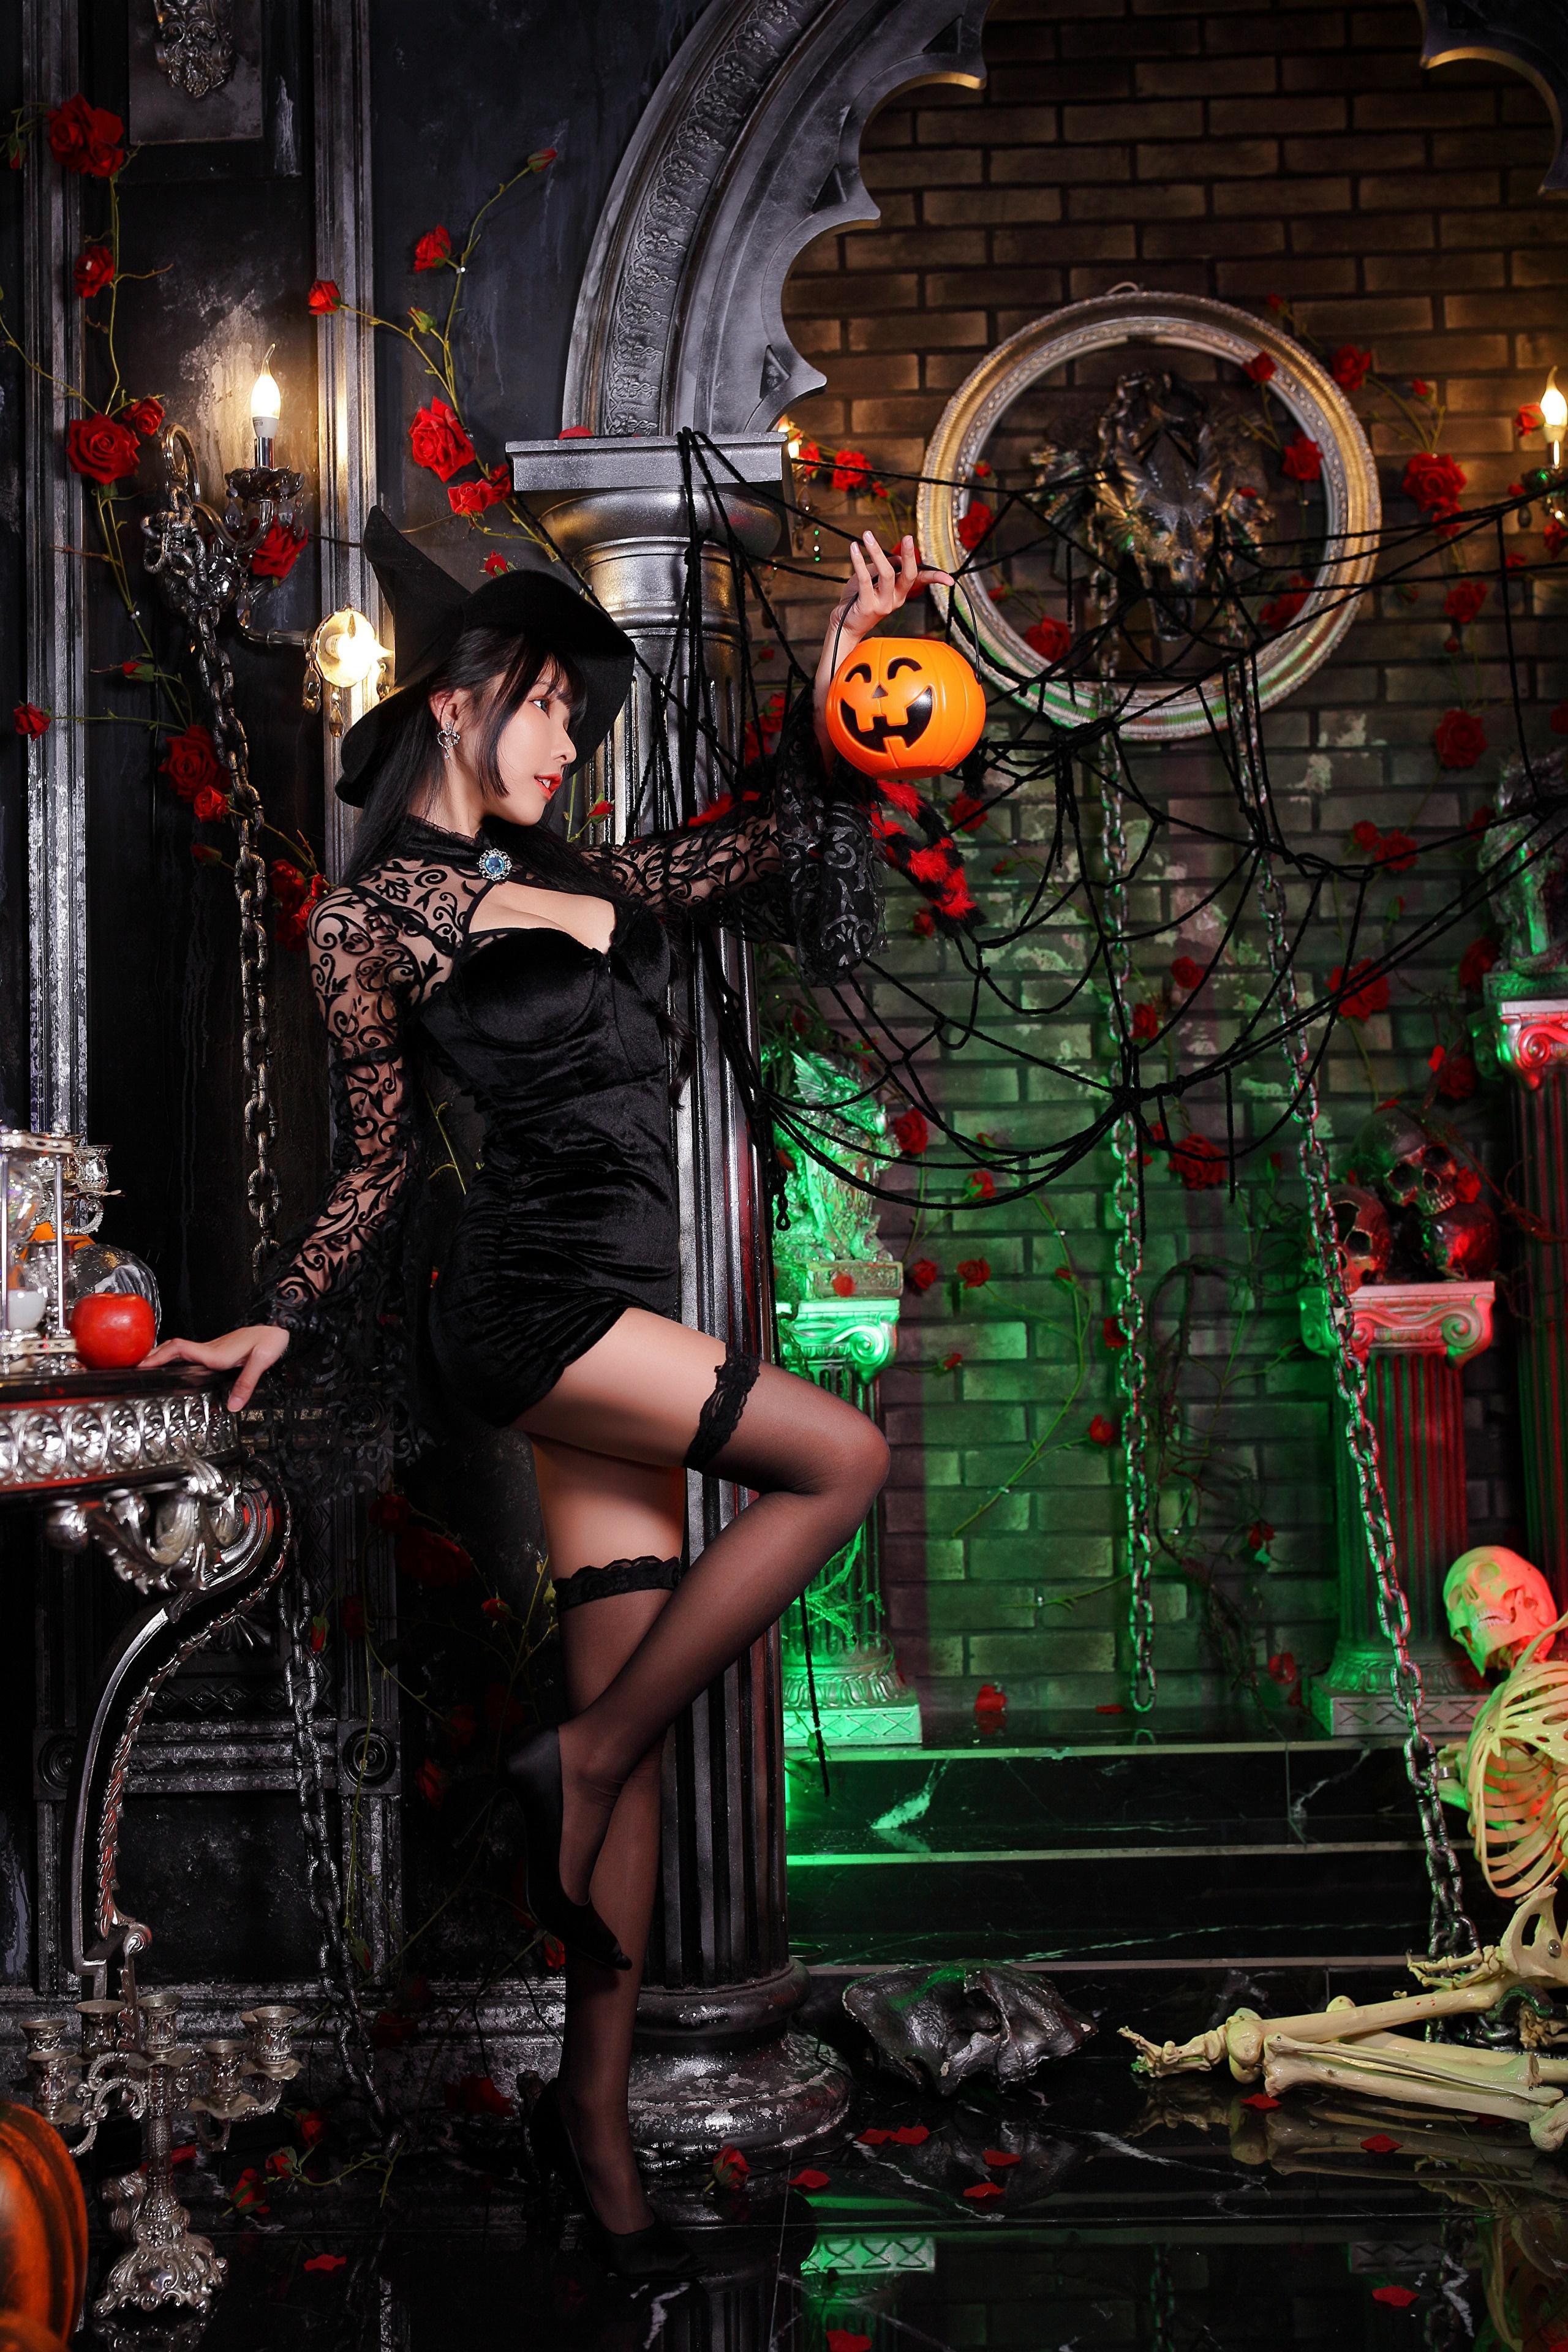 HD wallpaper, Bones, Lantern, Legs, Pumpkin, Dress, Asian, Hat, Witch, Halloween, Stockings, Stilettos